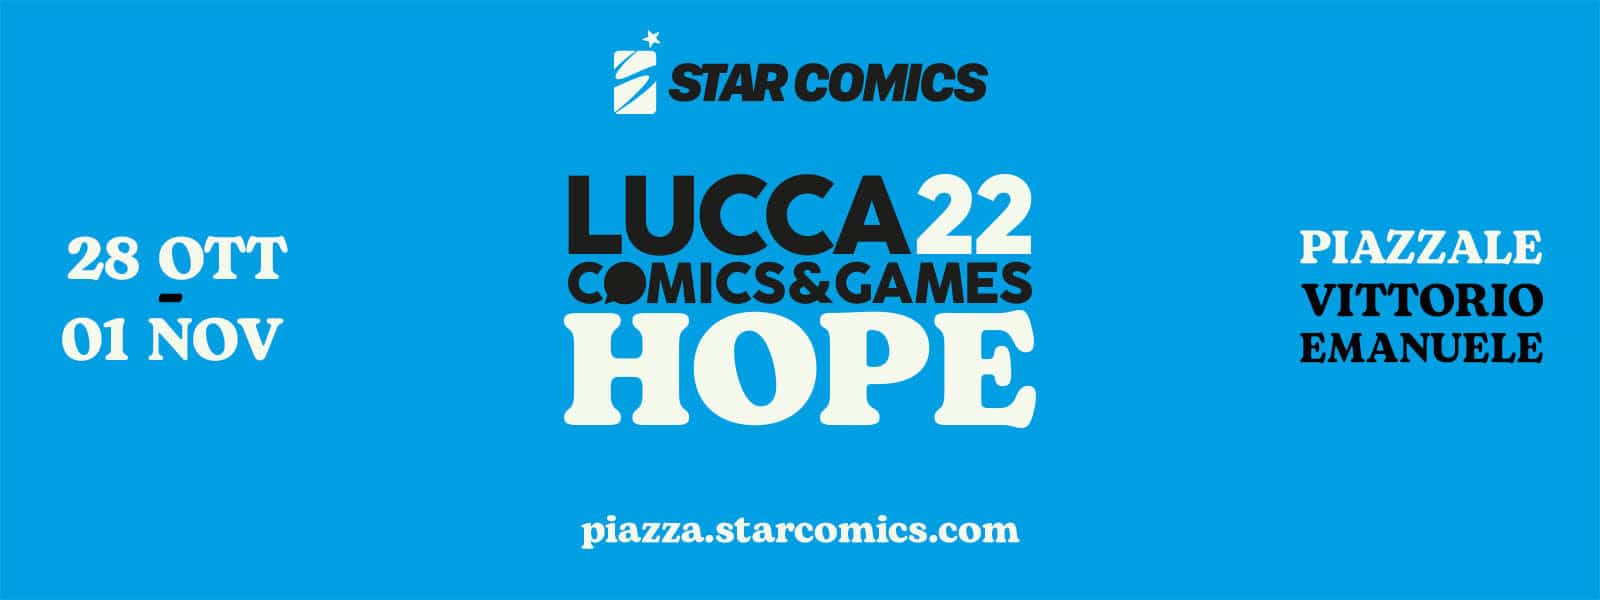 star comics lucca 2022